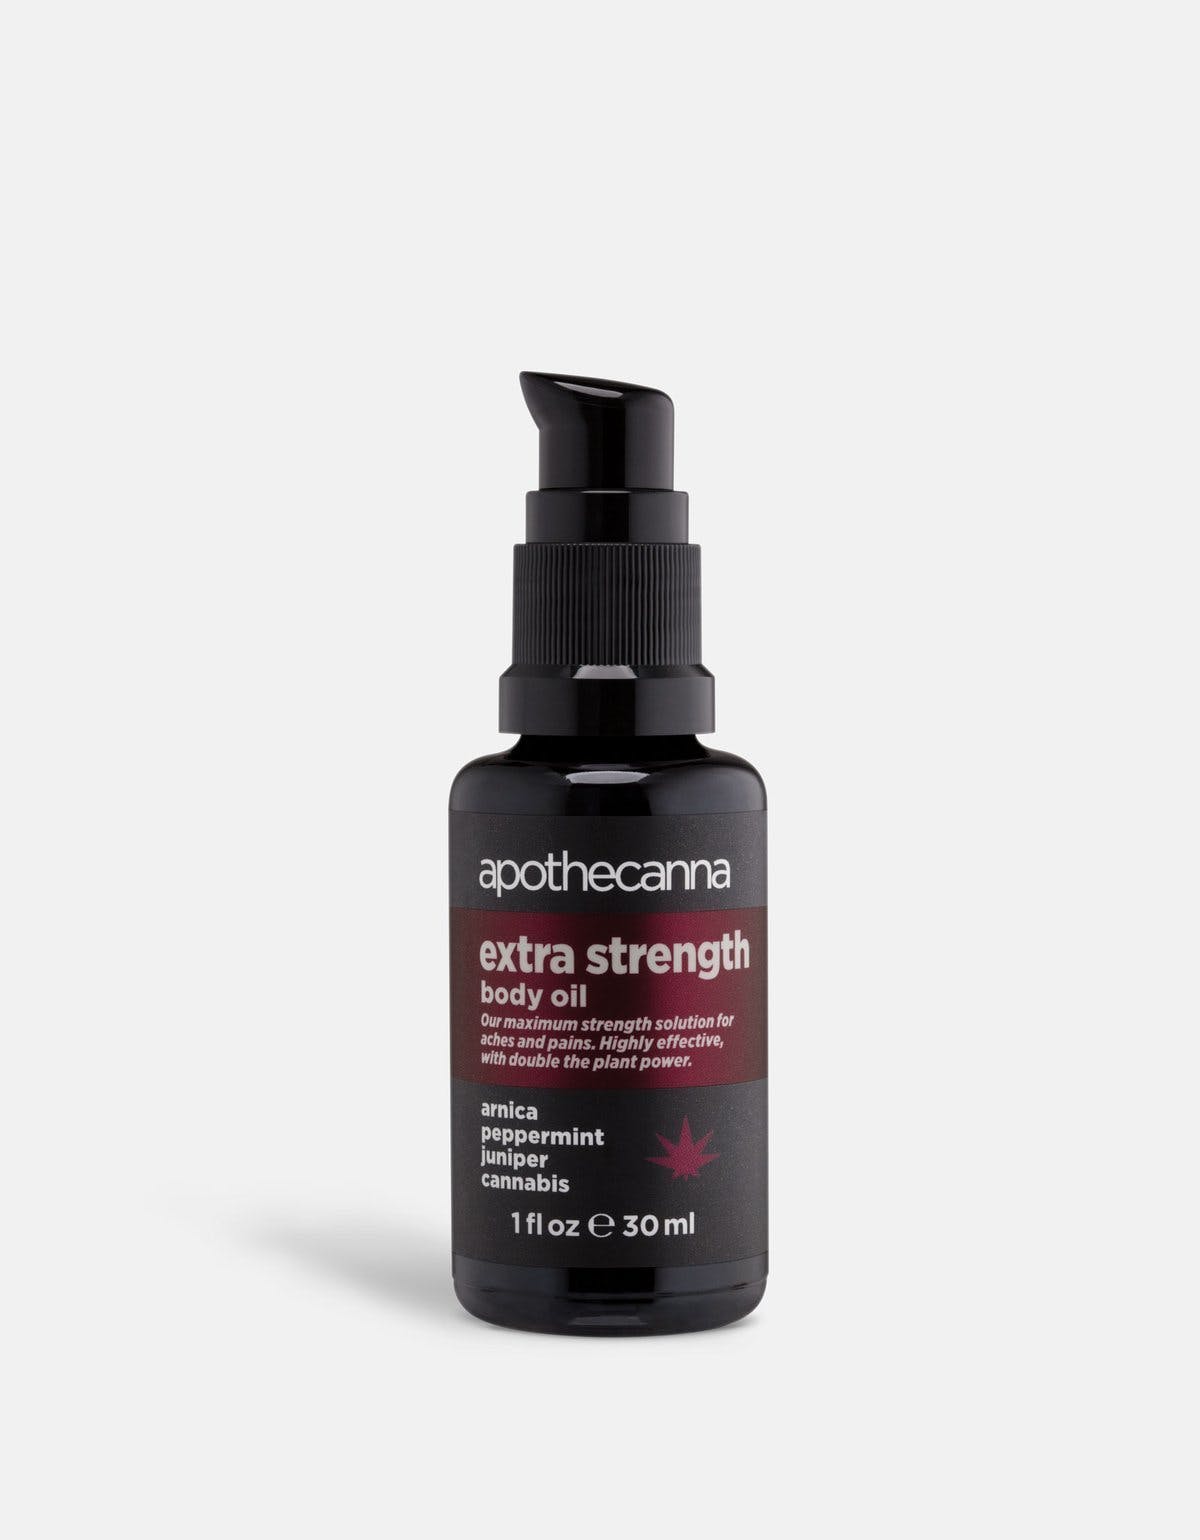 Apothecanna Extra Strength Body Oil